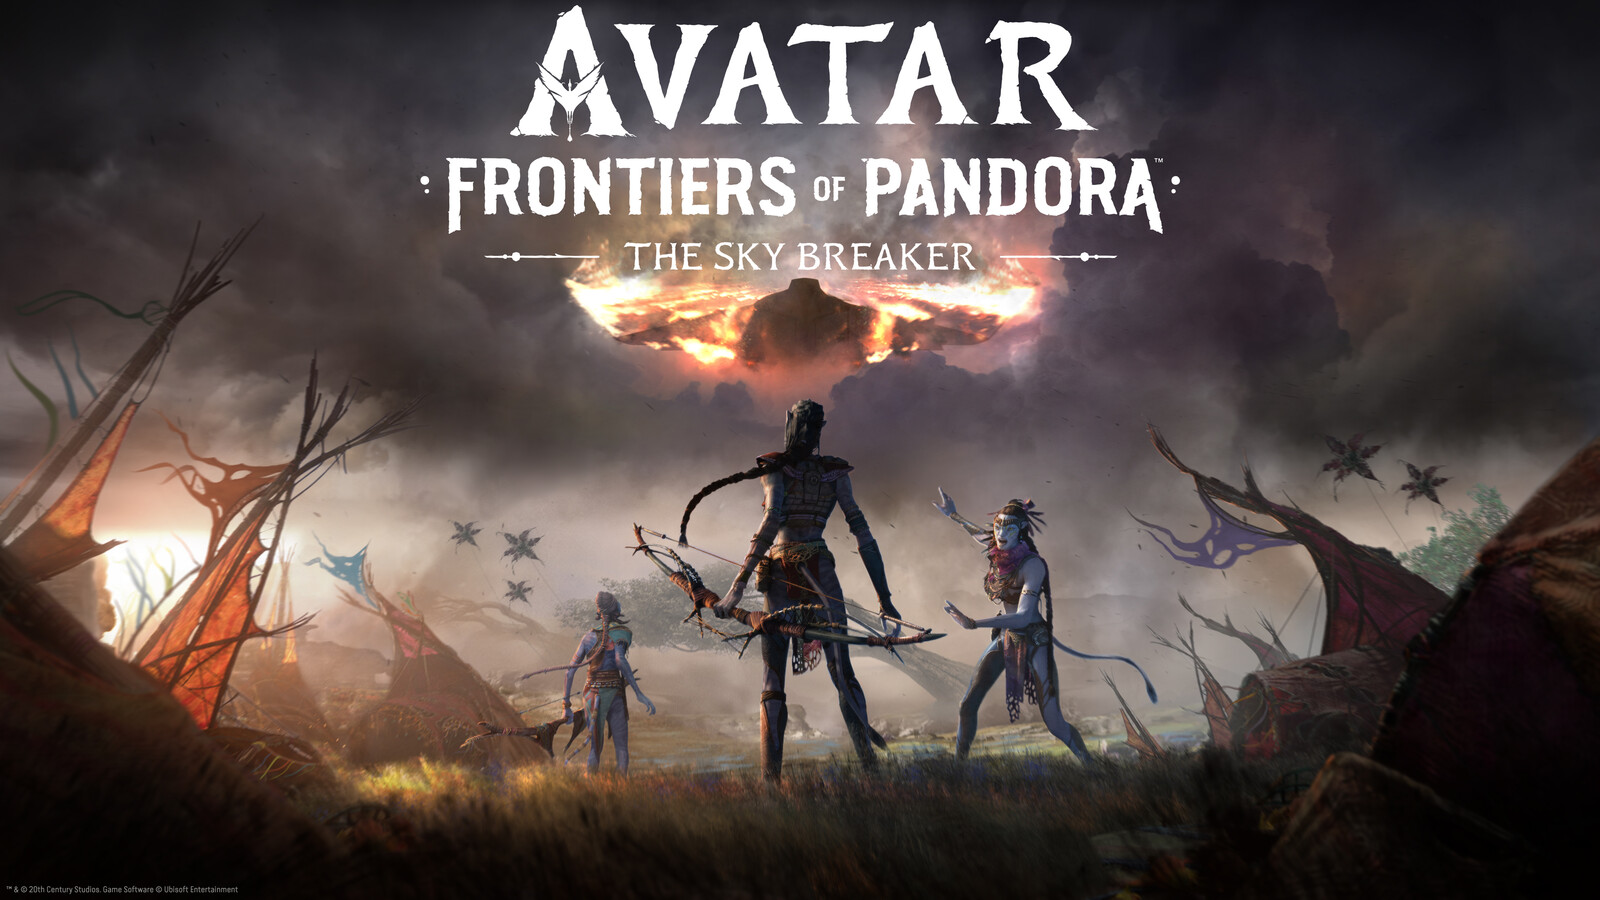 Avatar: Frontiers of Pandora - The Sky Breaker cover art